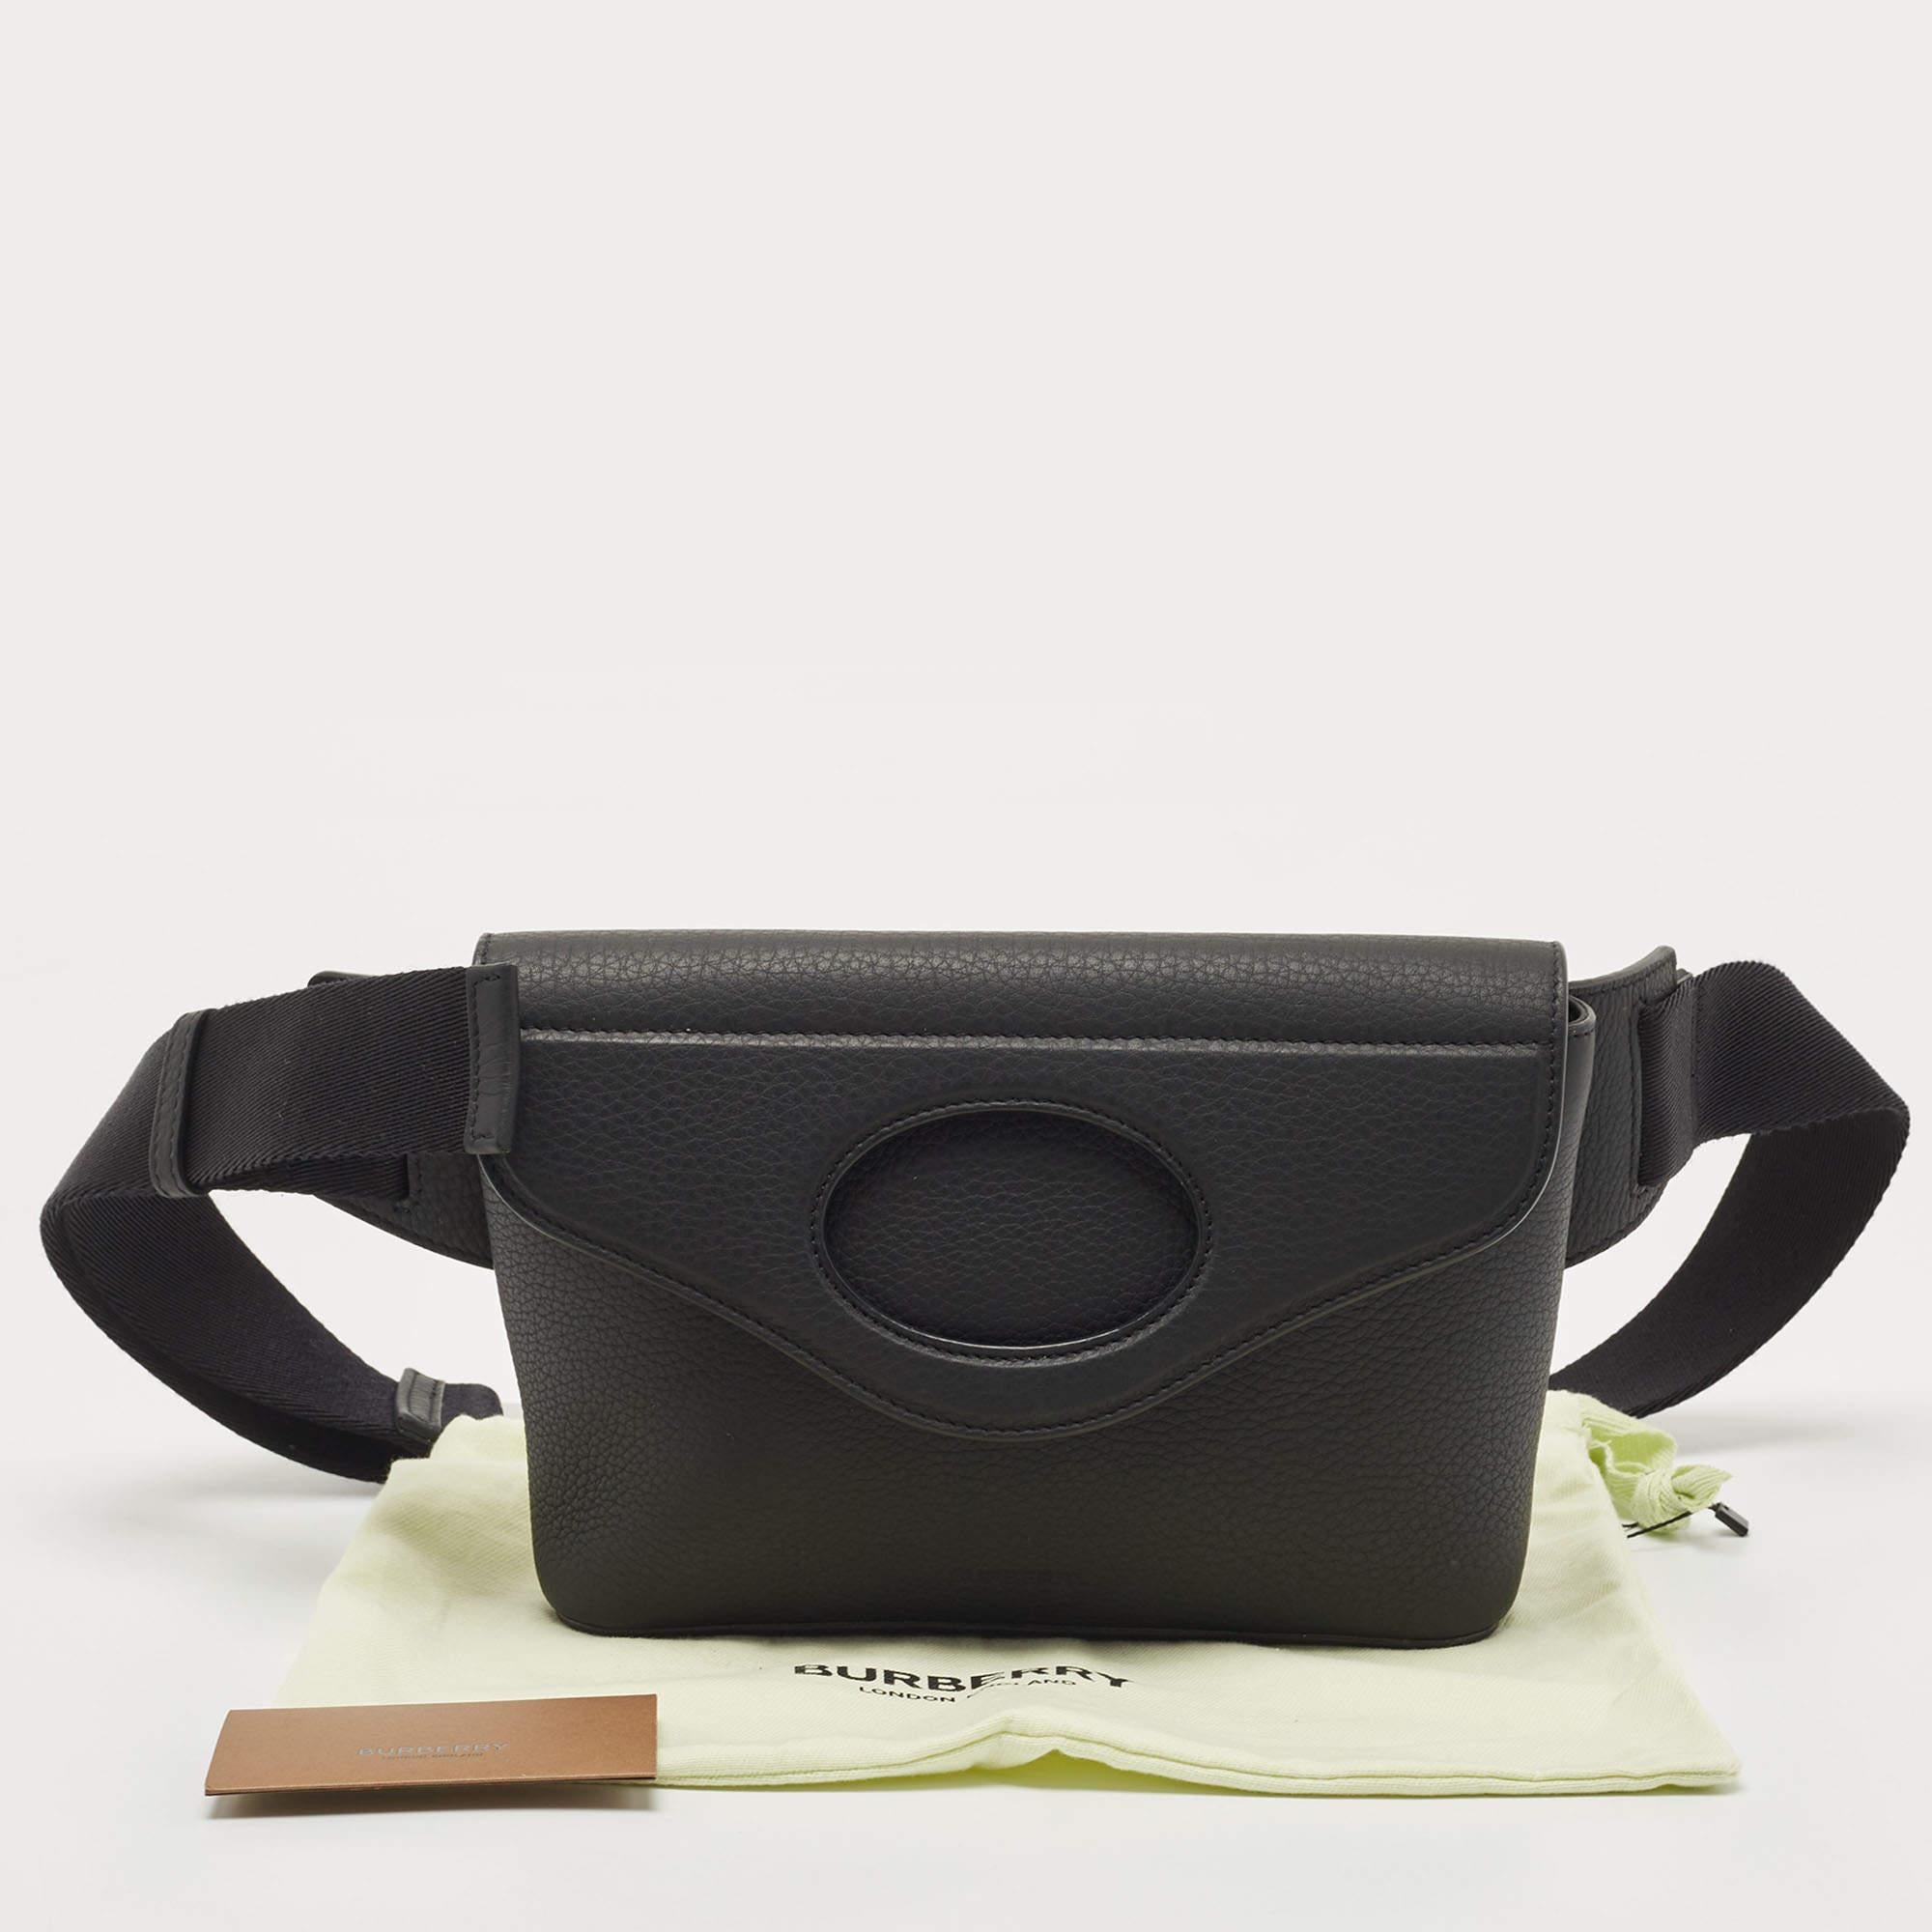 Burberry Black Leather Medium Pocket Belt Bag 7